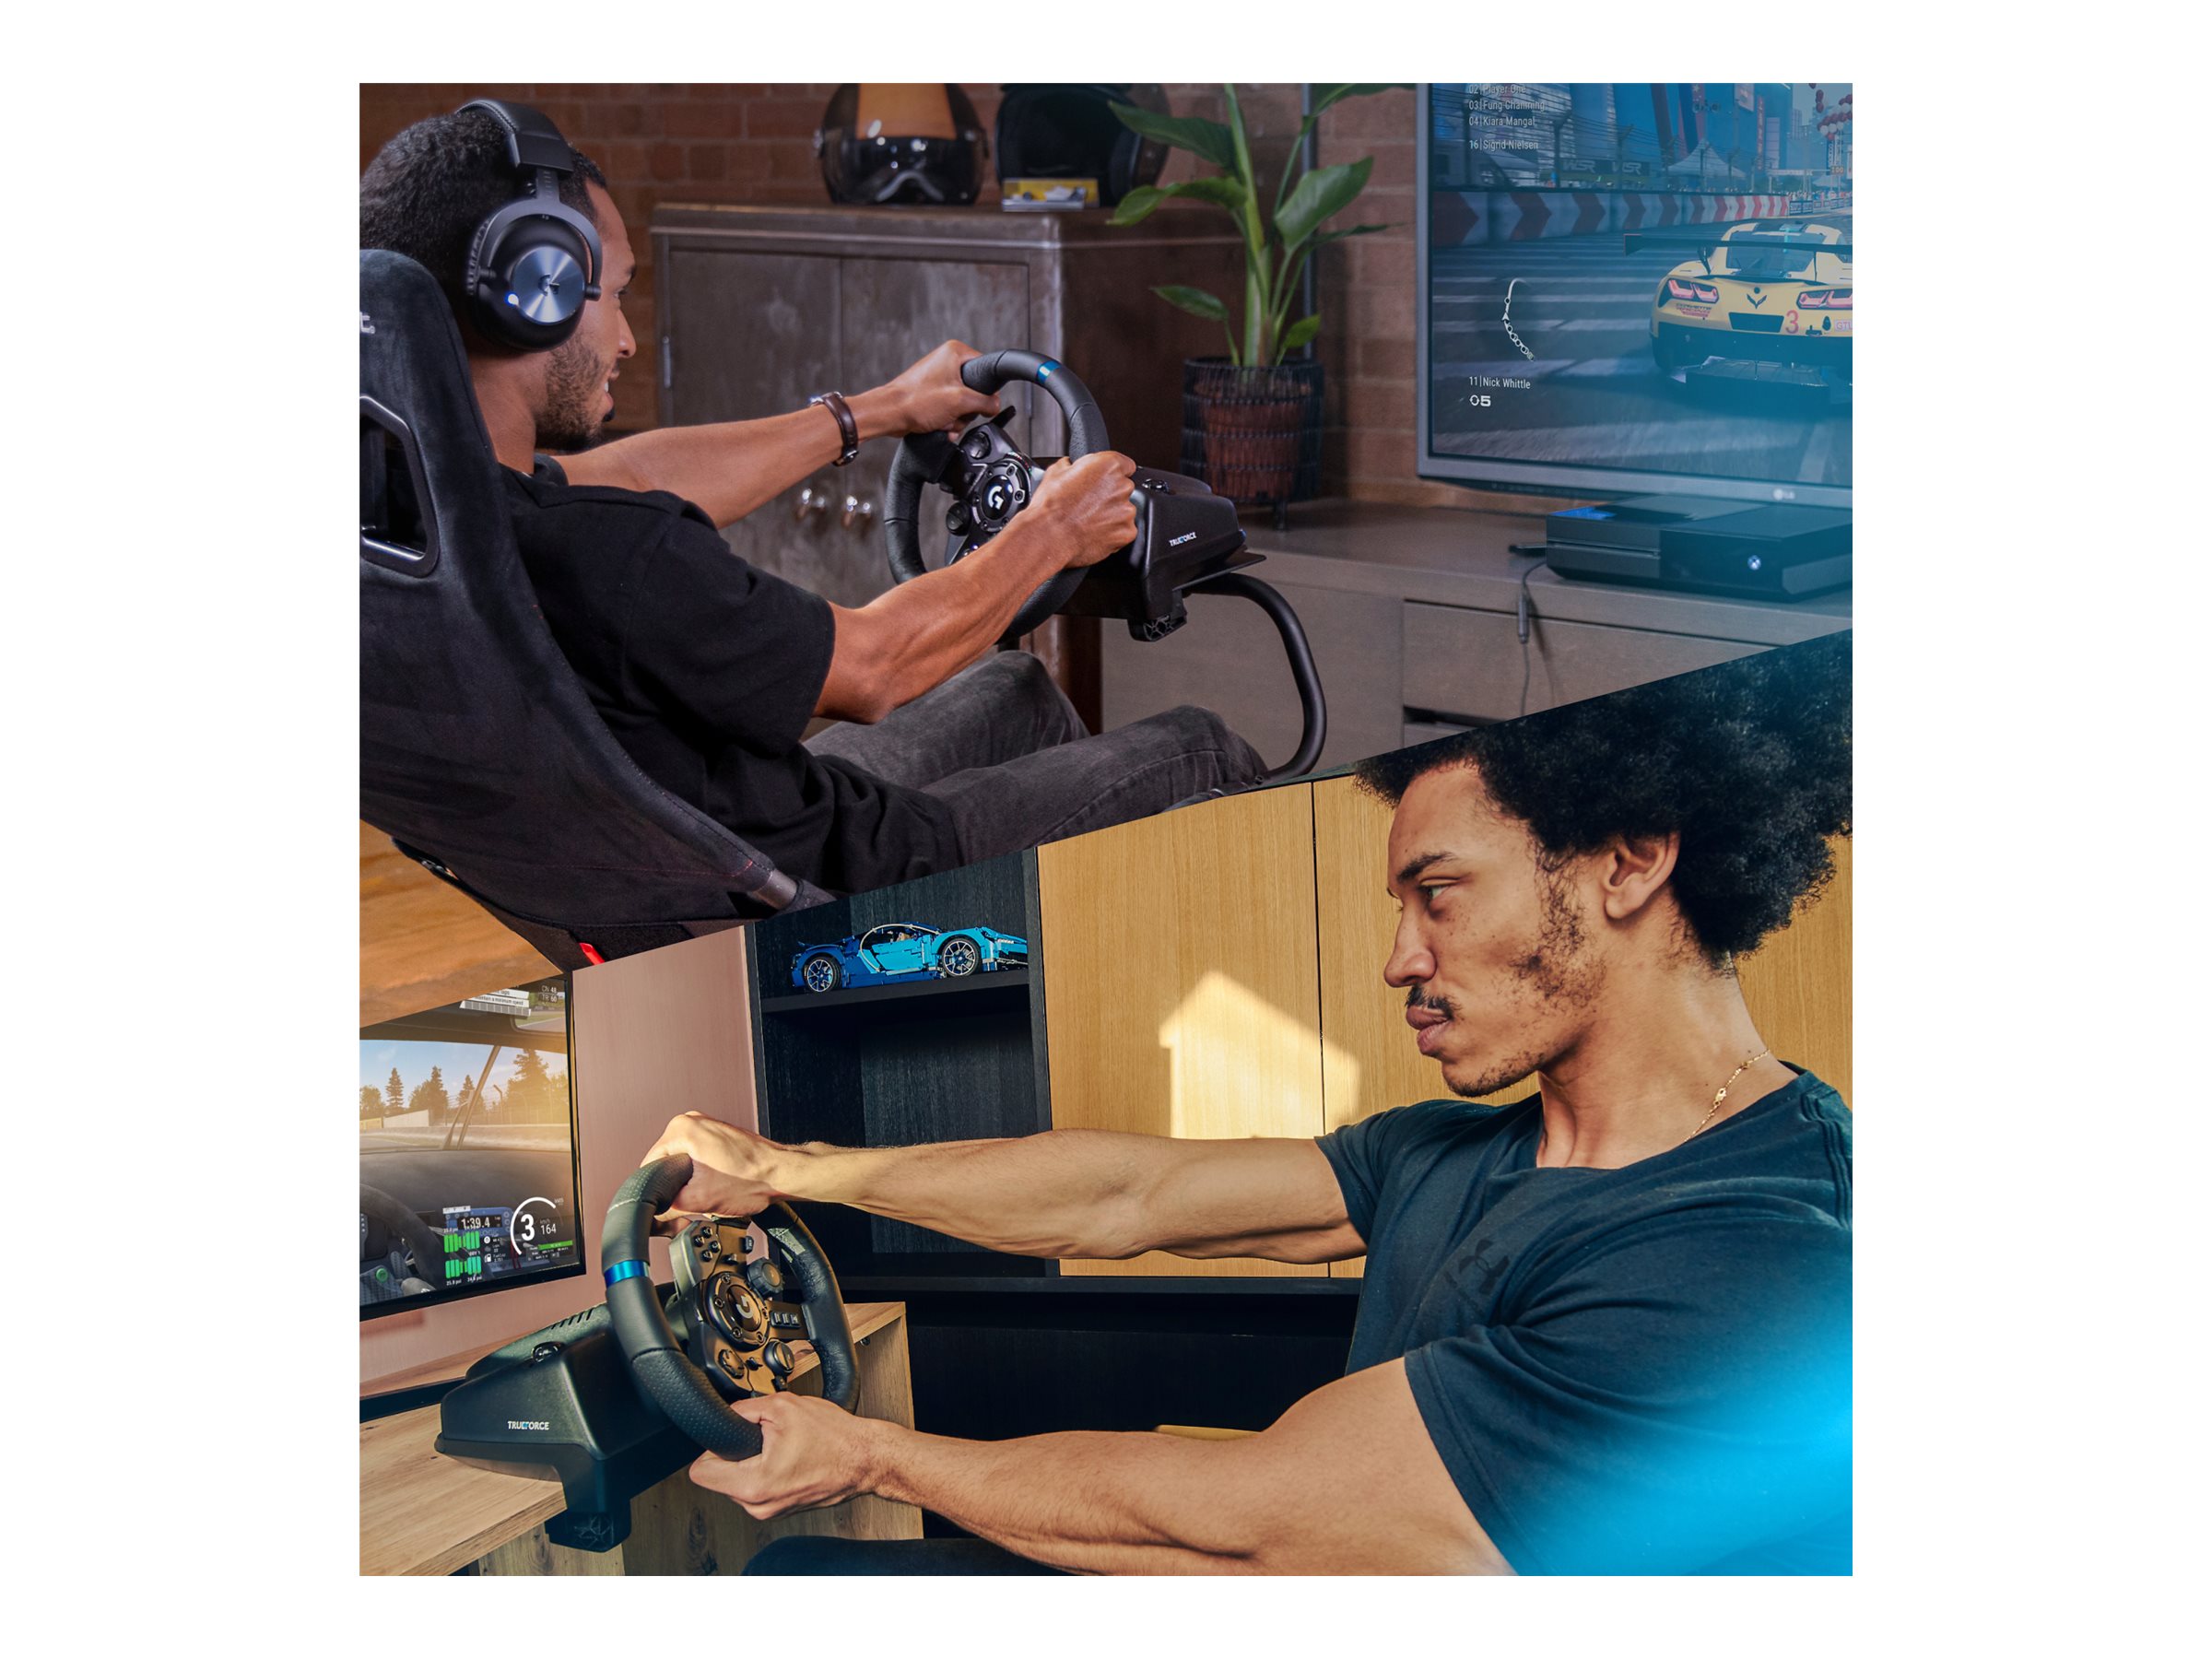 Logitech G923 Trueforce Sim Racing Wheel for Xbox One, Xbox